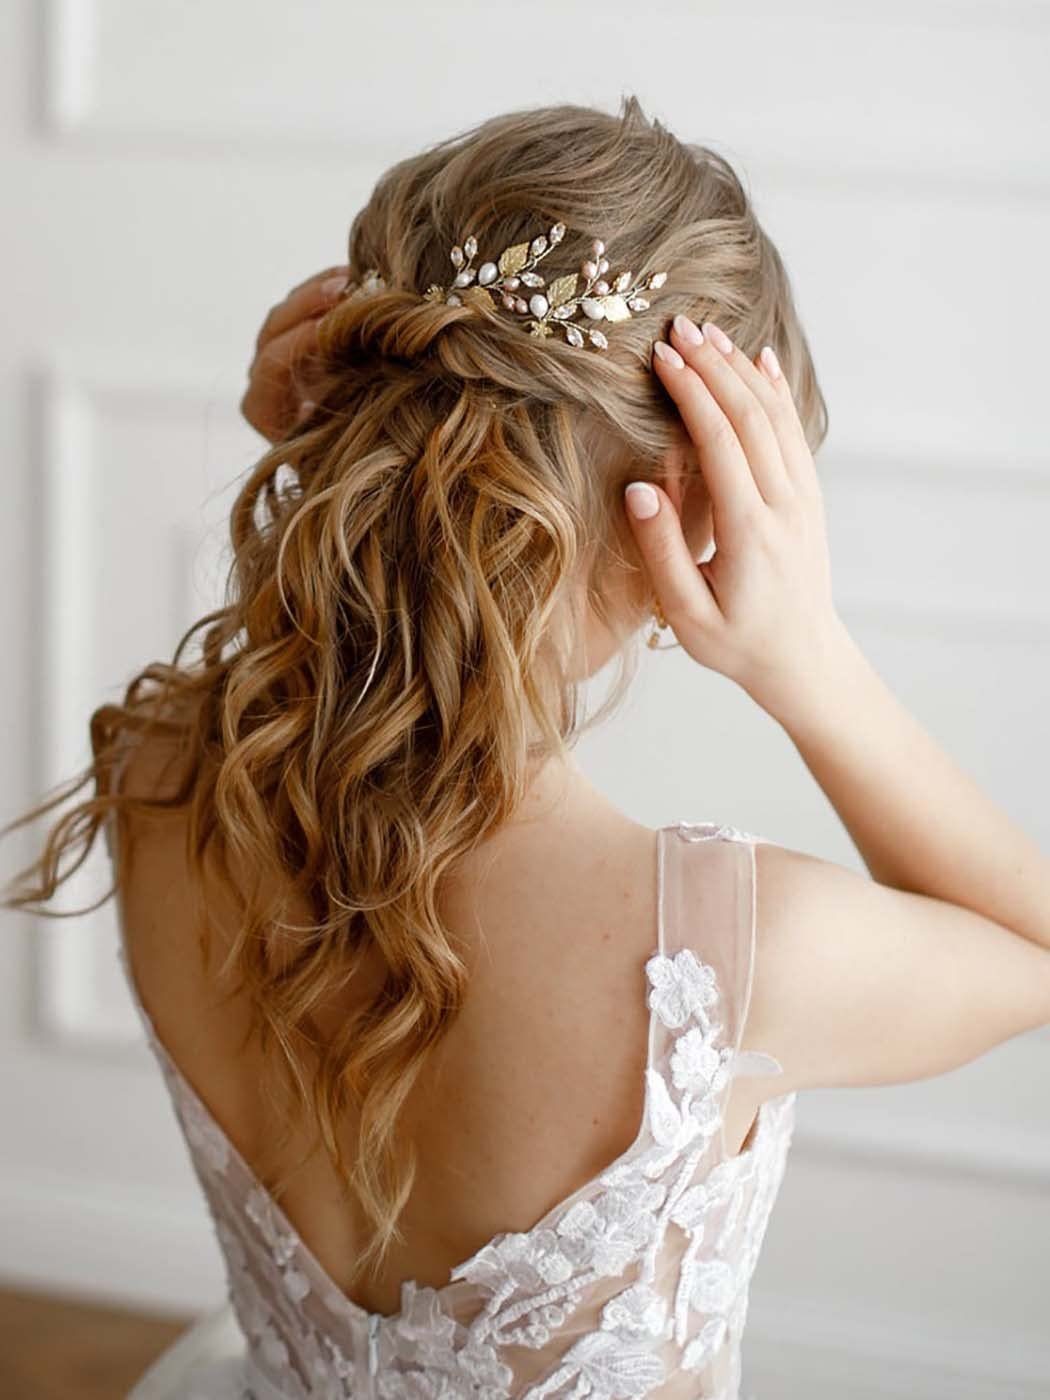 (1-tlg) WaKuKa Diadem Blattgold-Perlen-Haargabel, Braut-Kopfbedeckung U-förmige